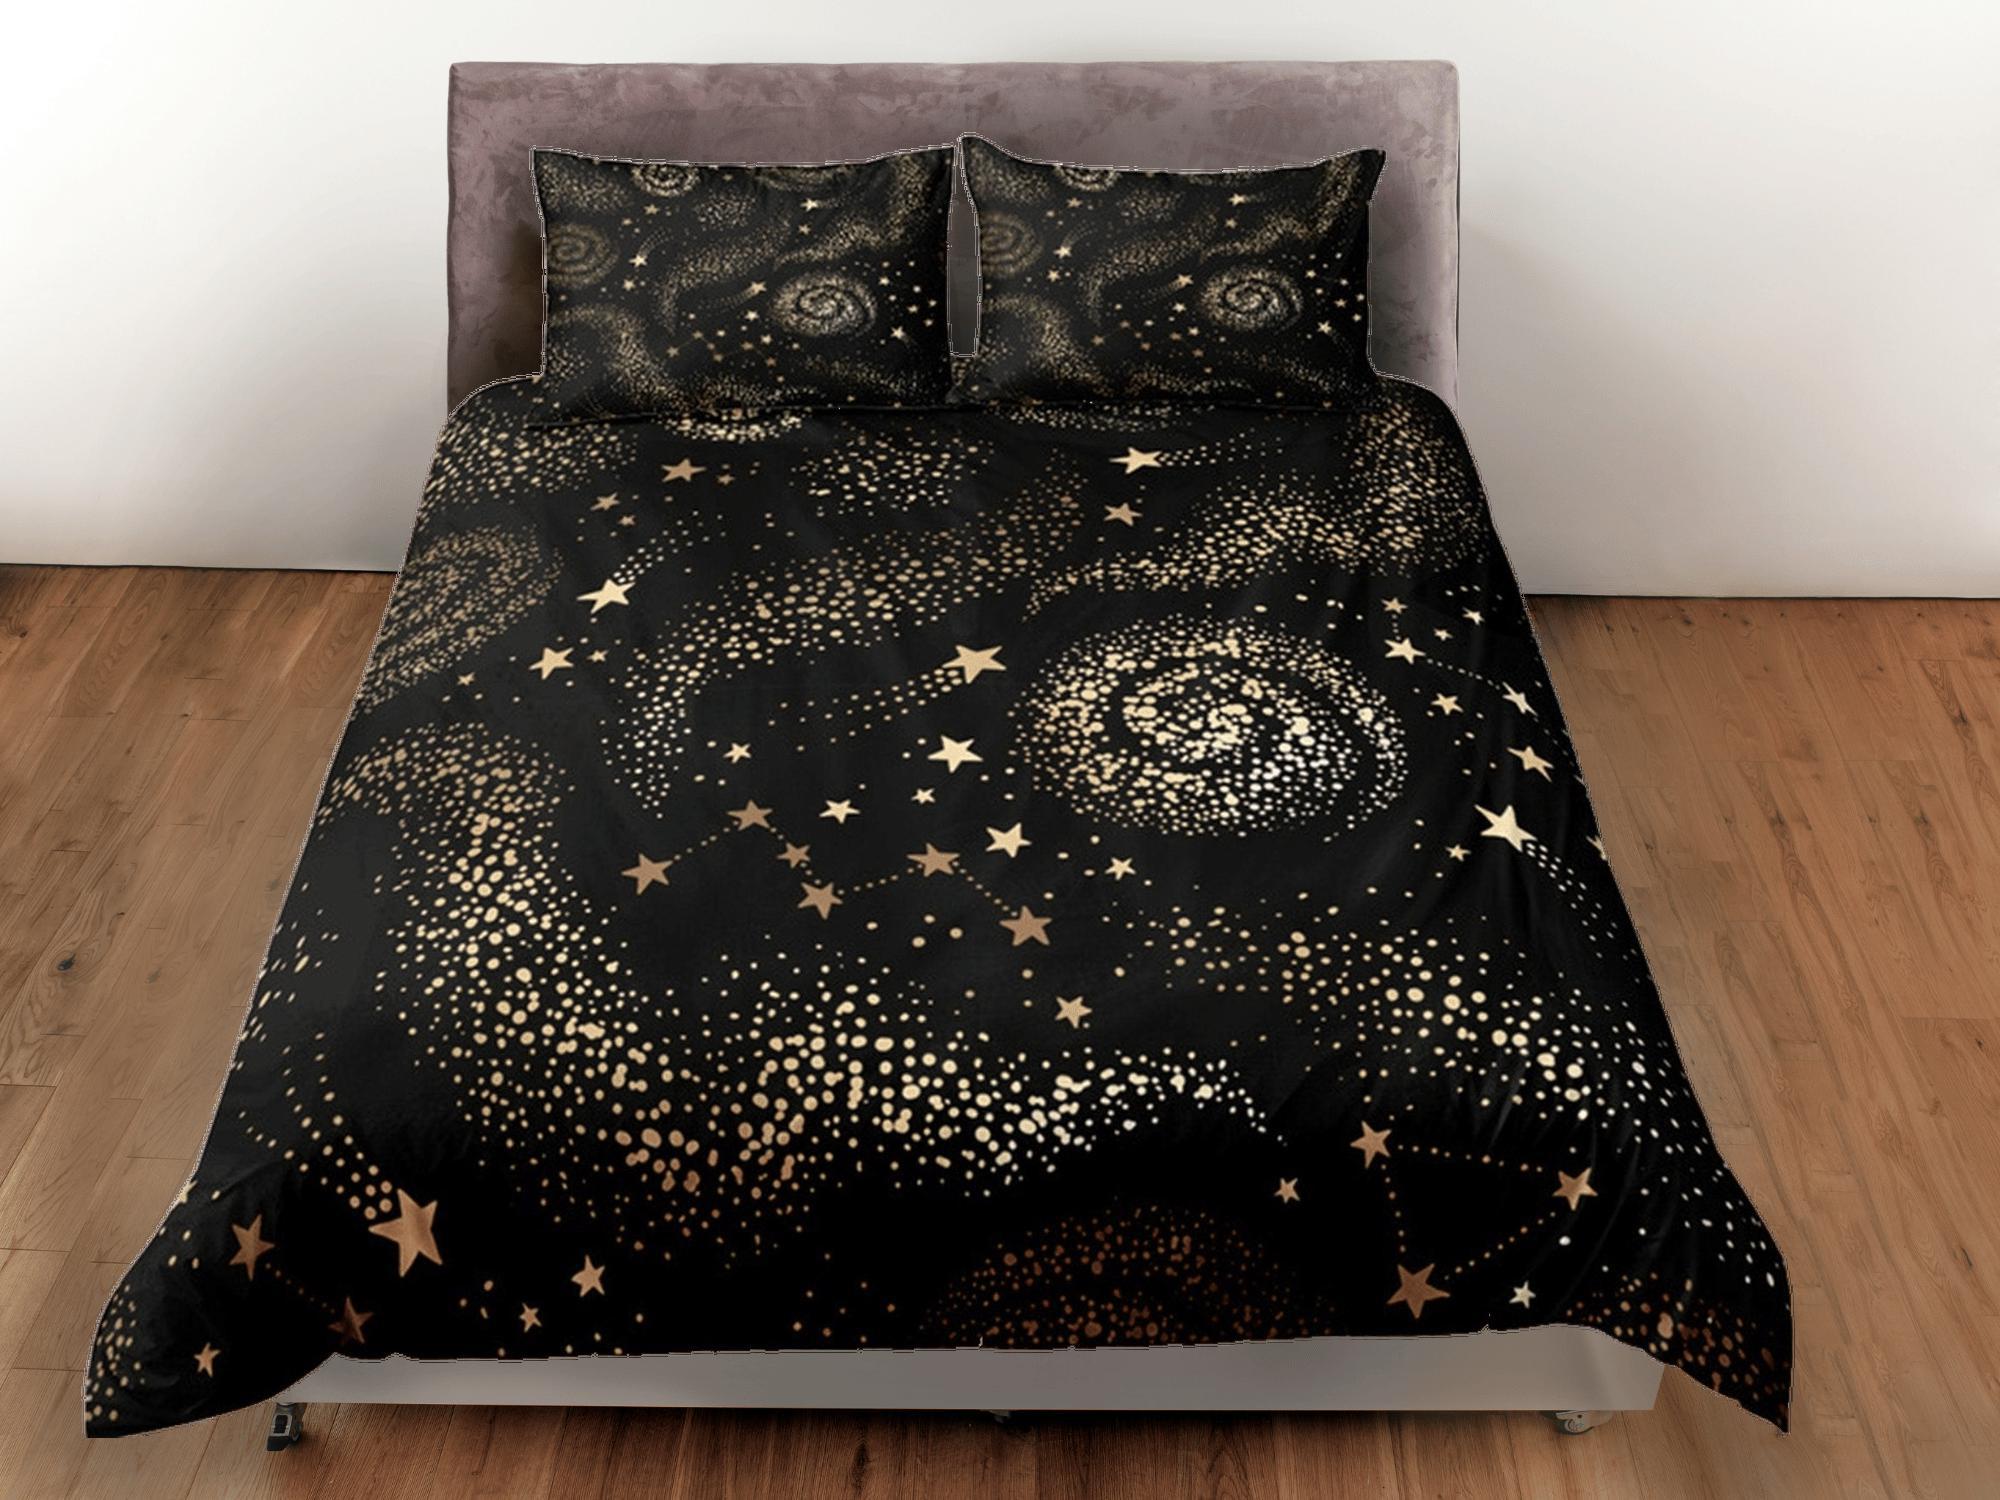 daintyduvet Galaxy Black Duvet Cover Set Starry Night Bedspread, Dorm Bedding with Pillowcase